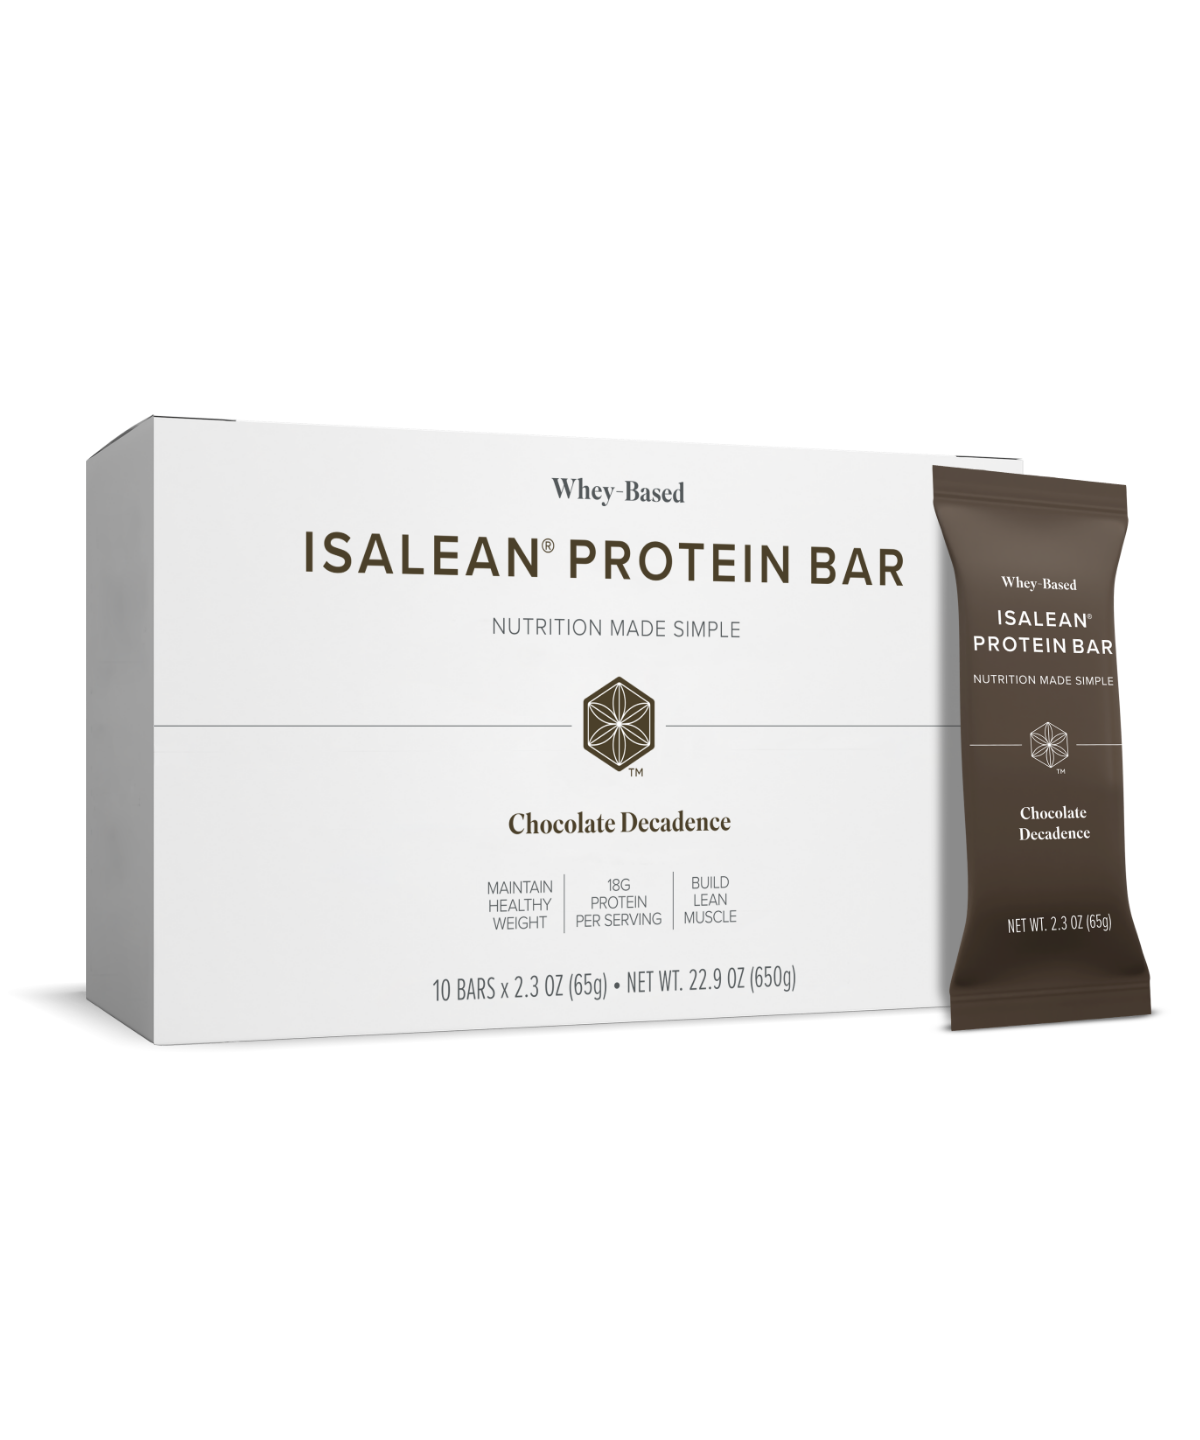 Whey-Based IsaLean® Protein Bar